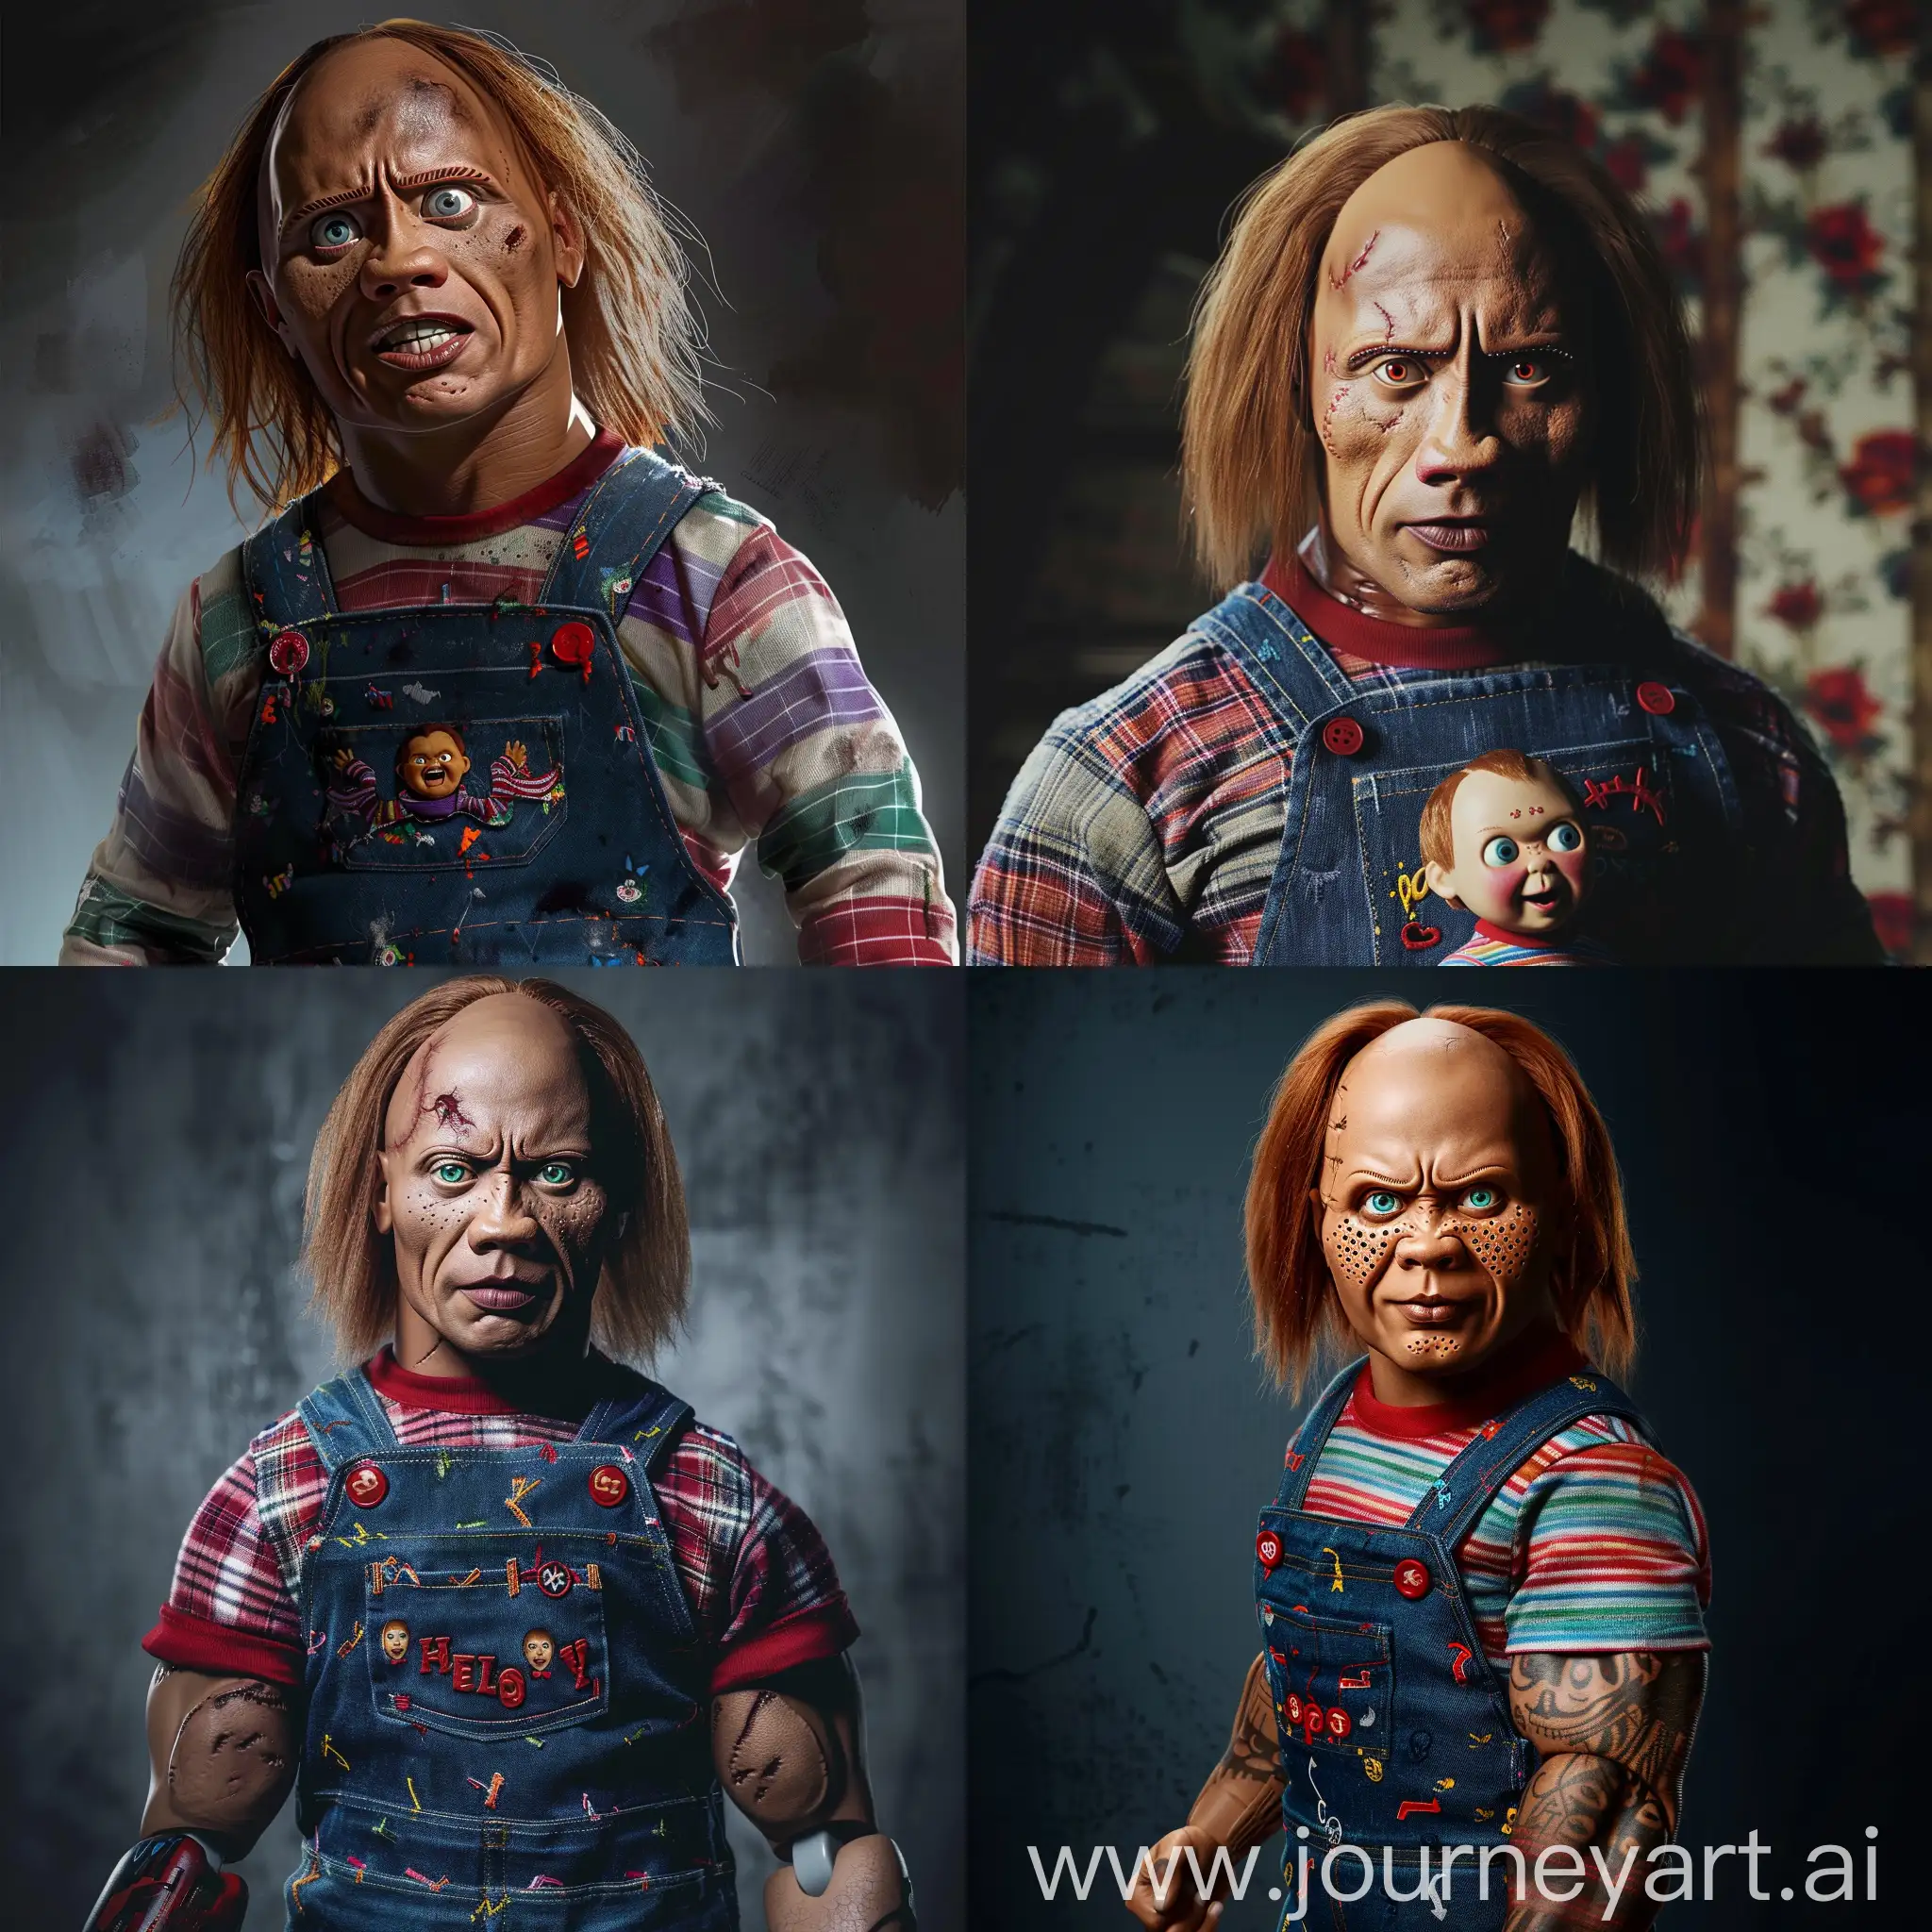 Dwayne-Johnson-as-Chucky-in-a-Cinematic-Scene